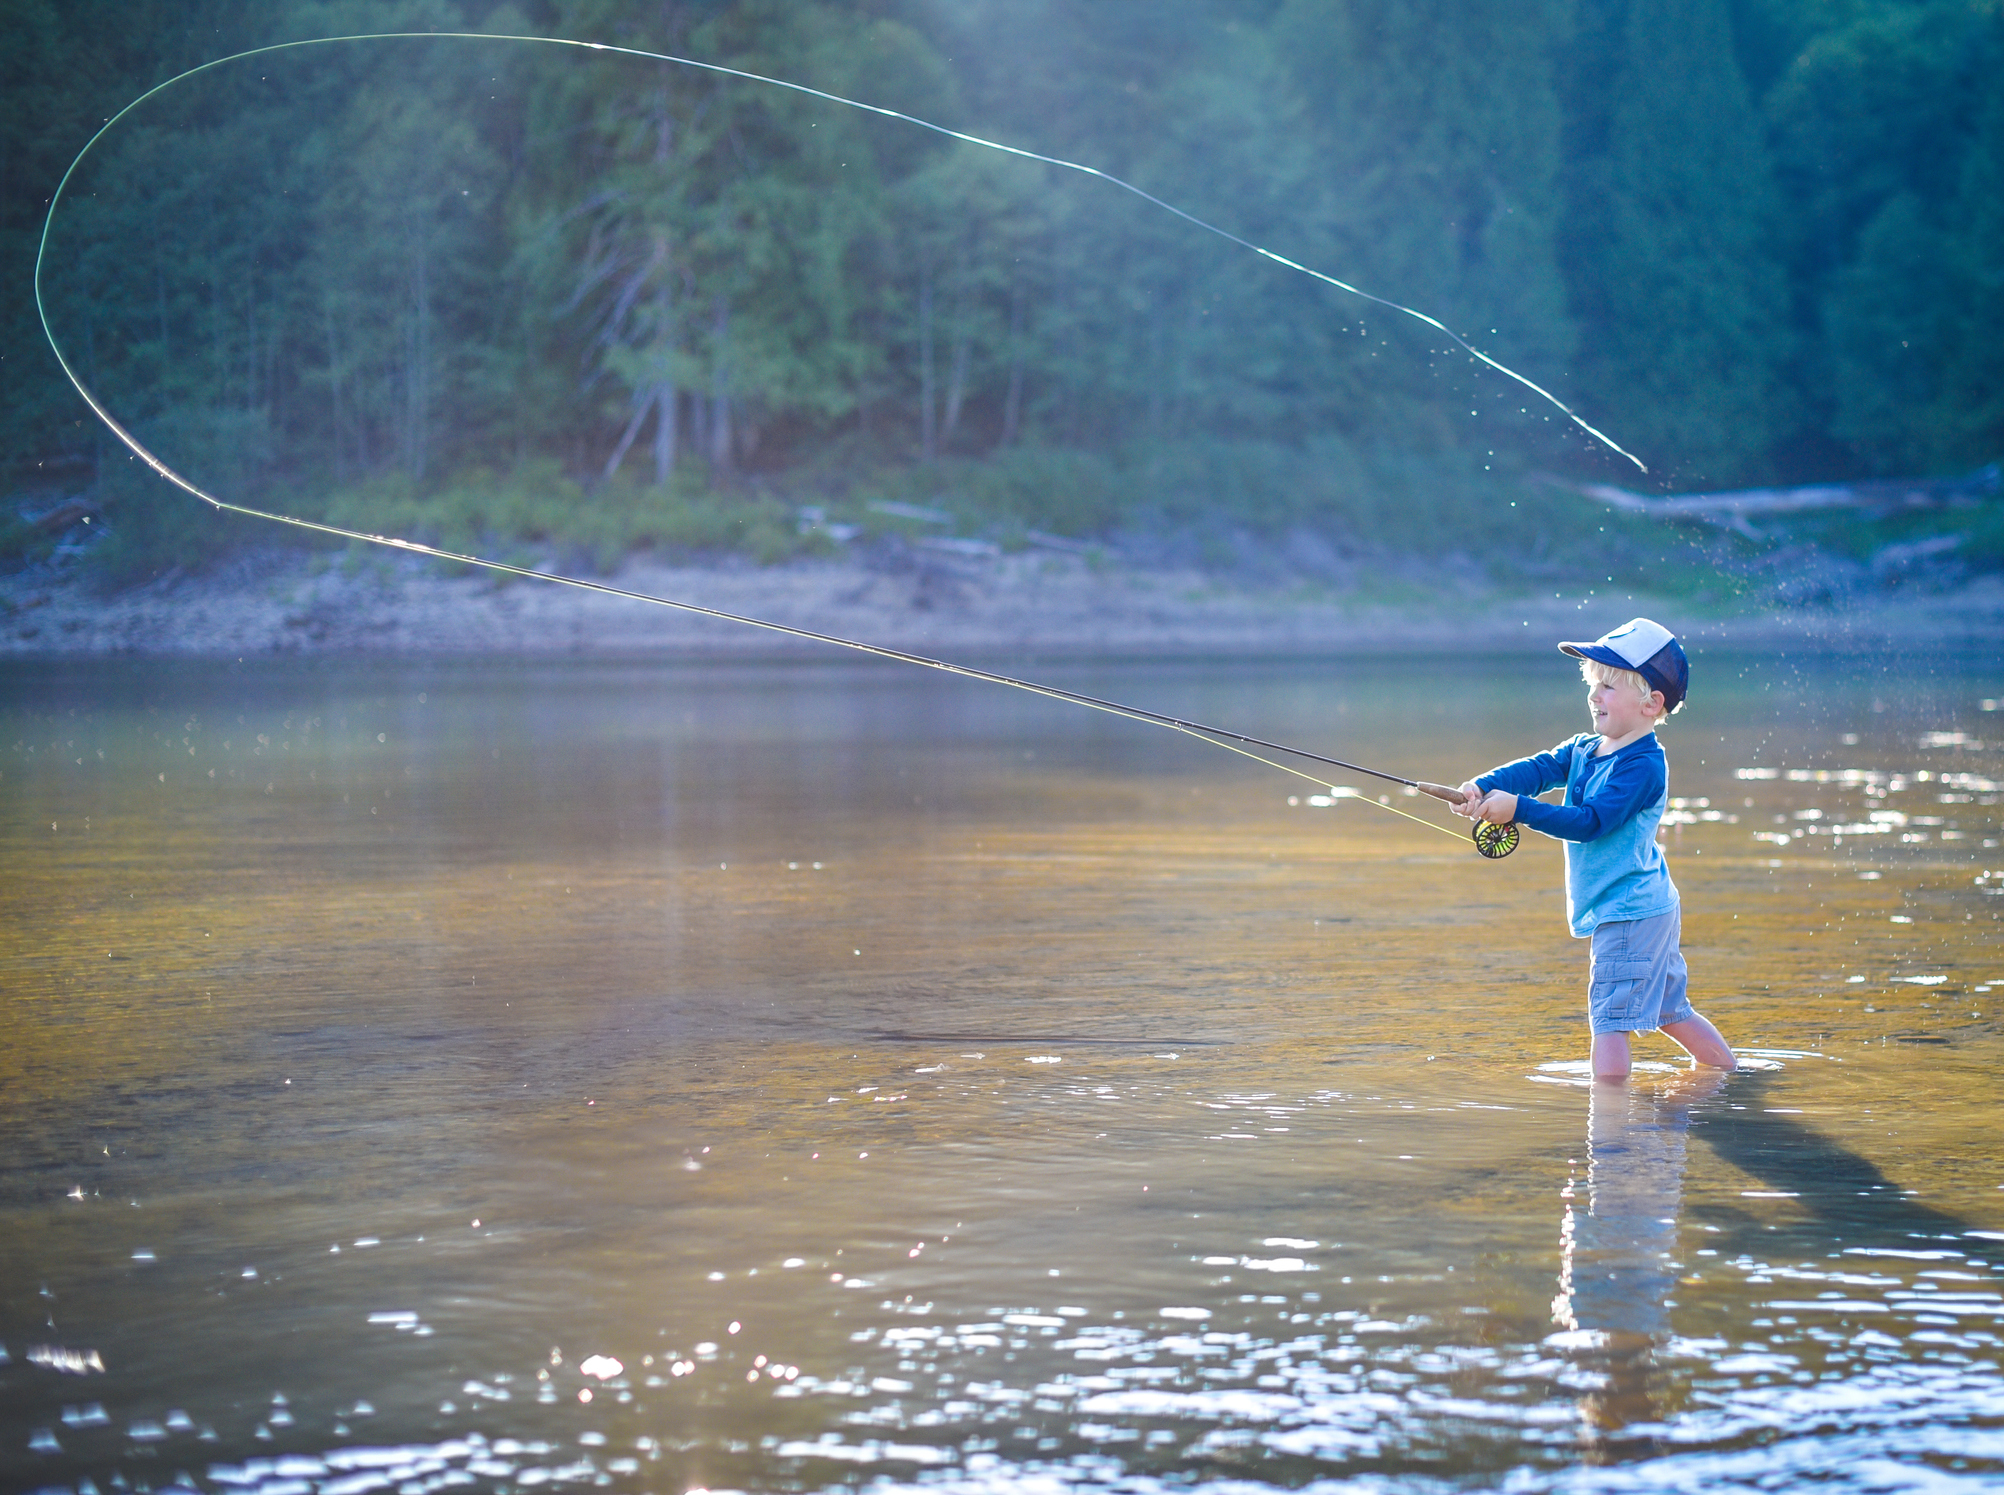 Take a kid fishing.